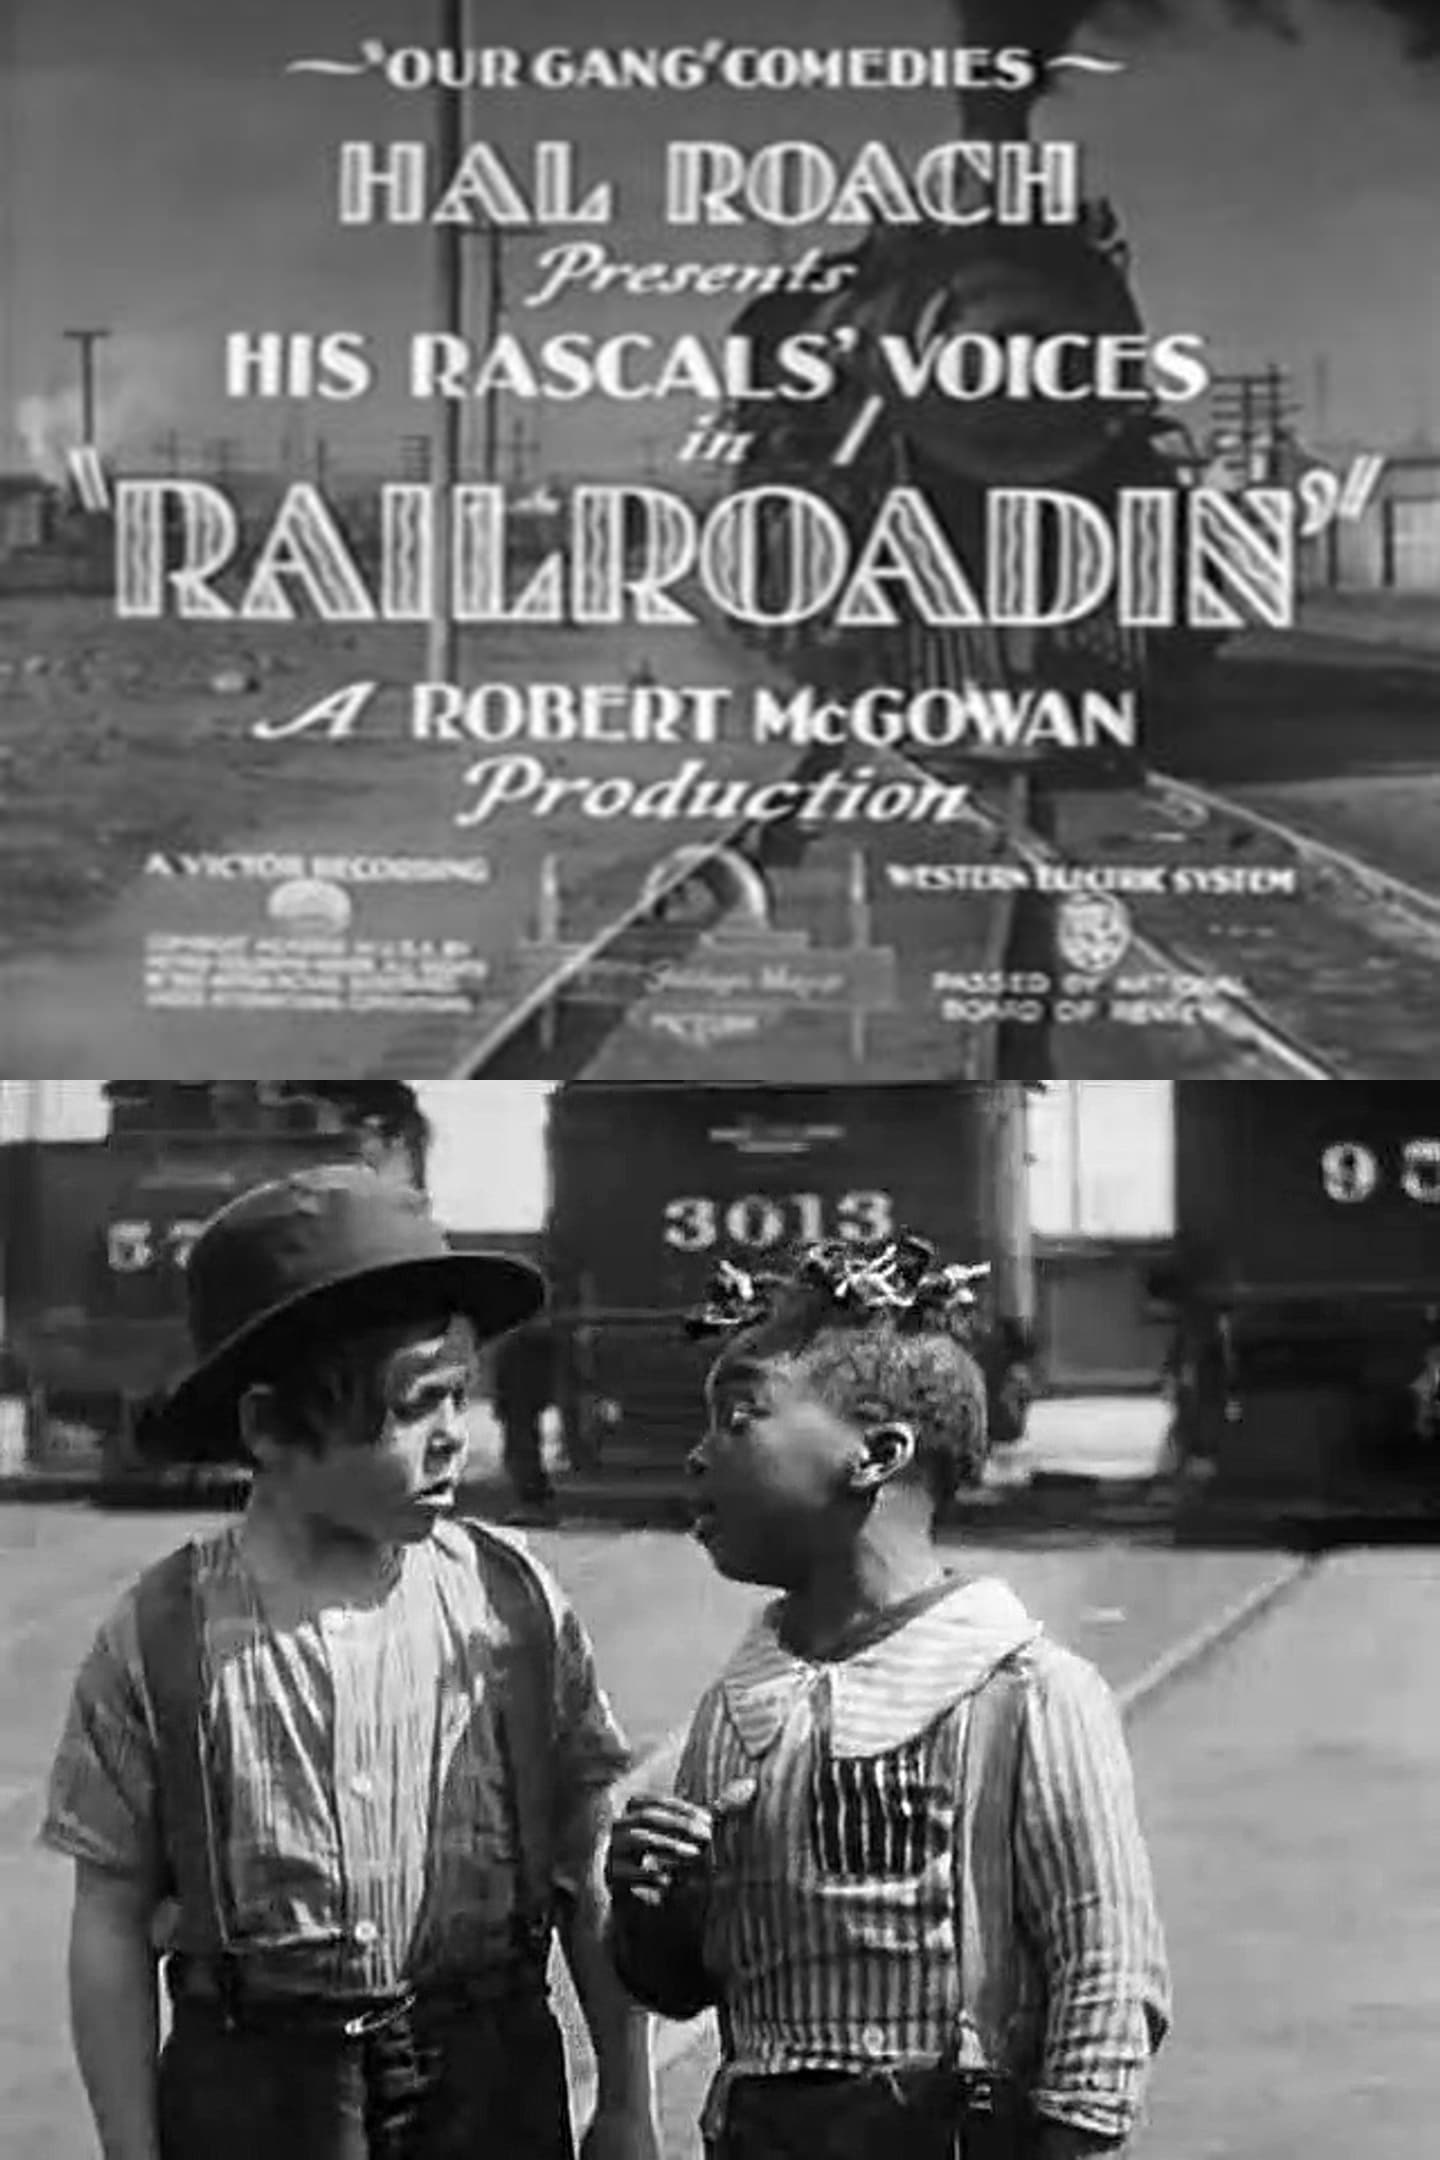 Railroadin' (1929)